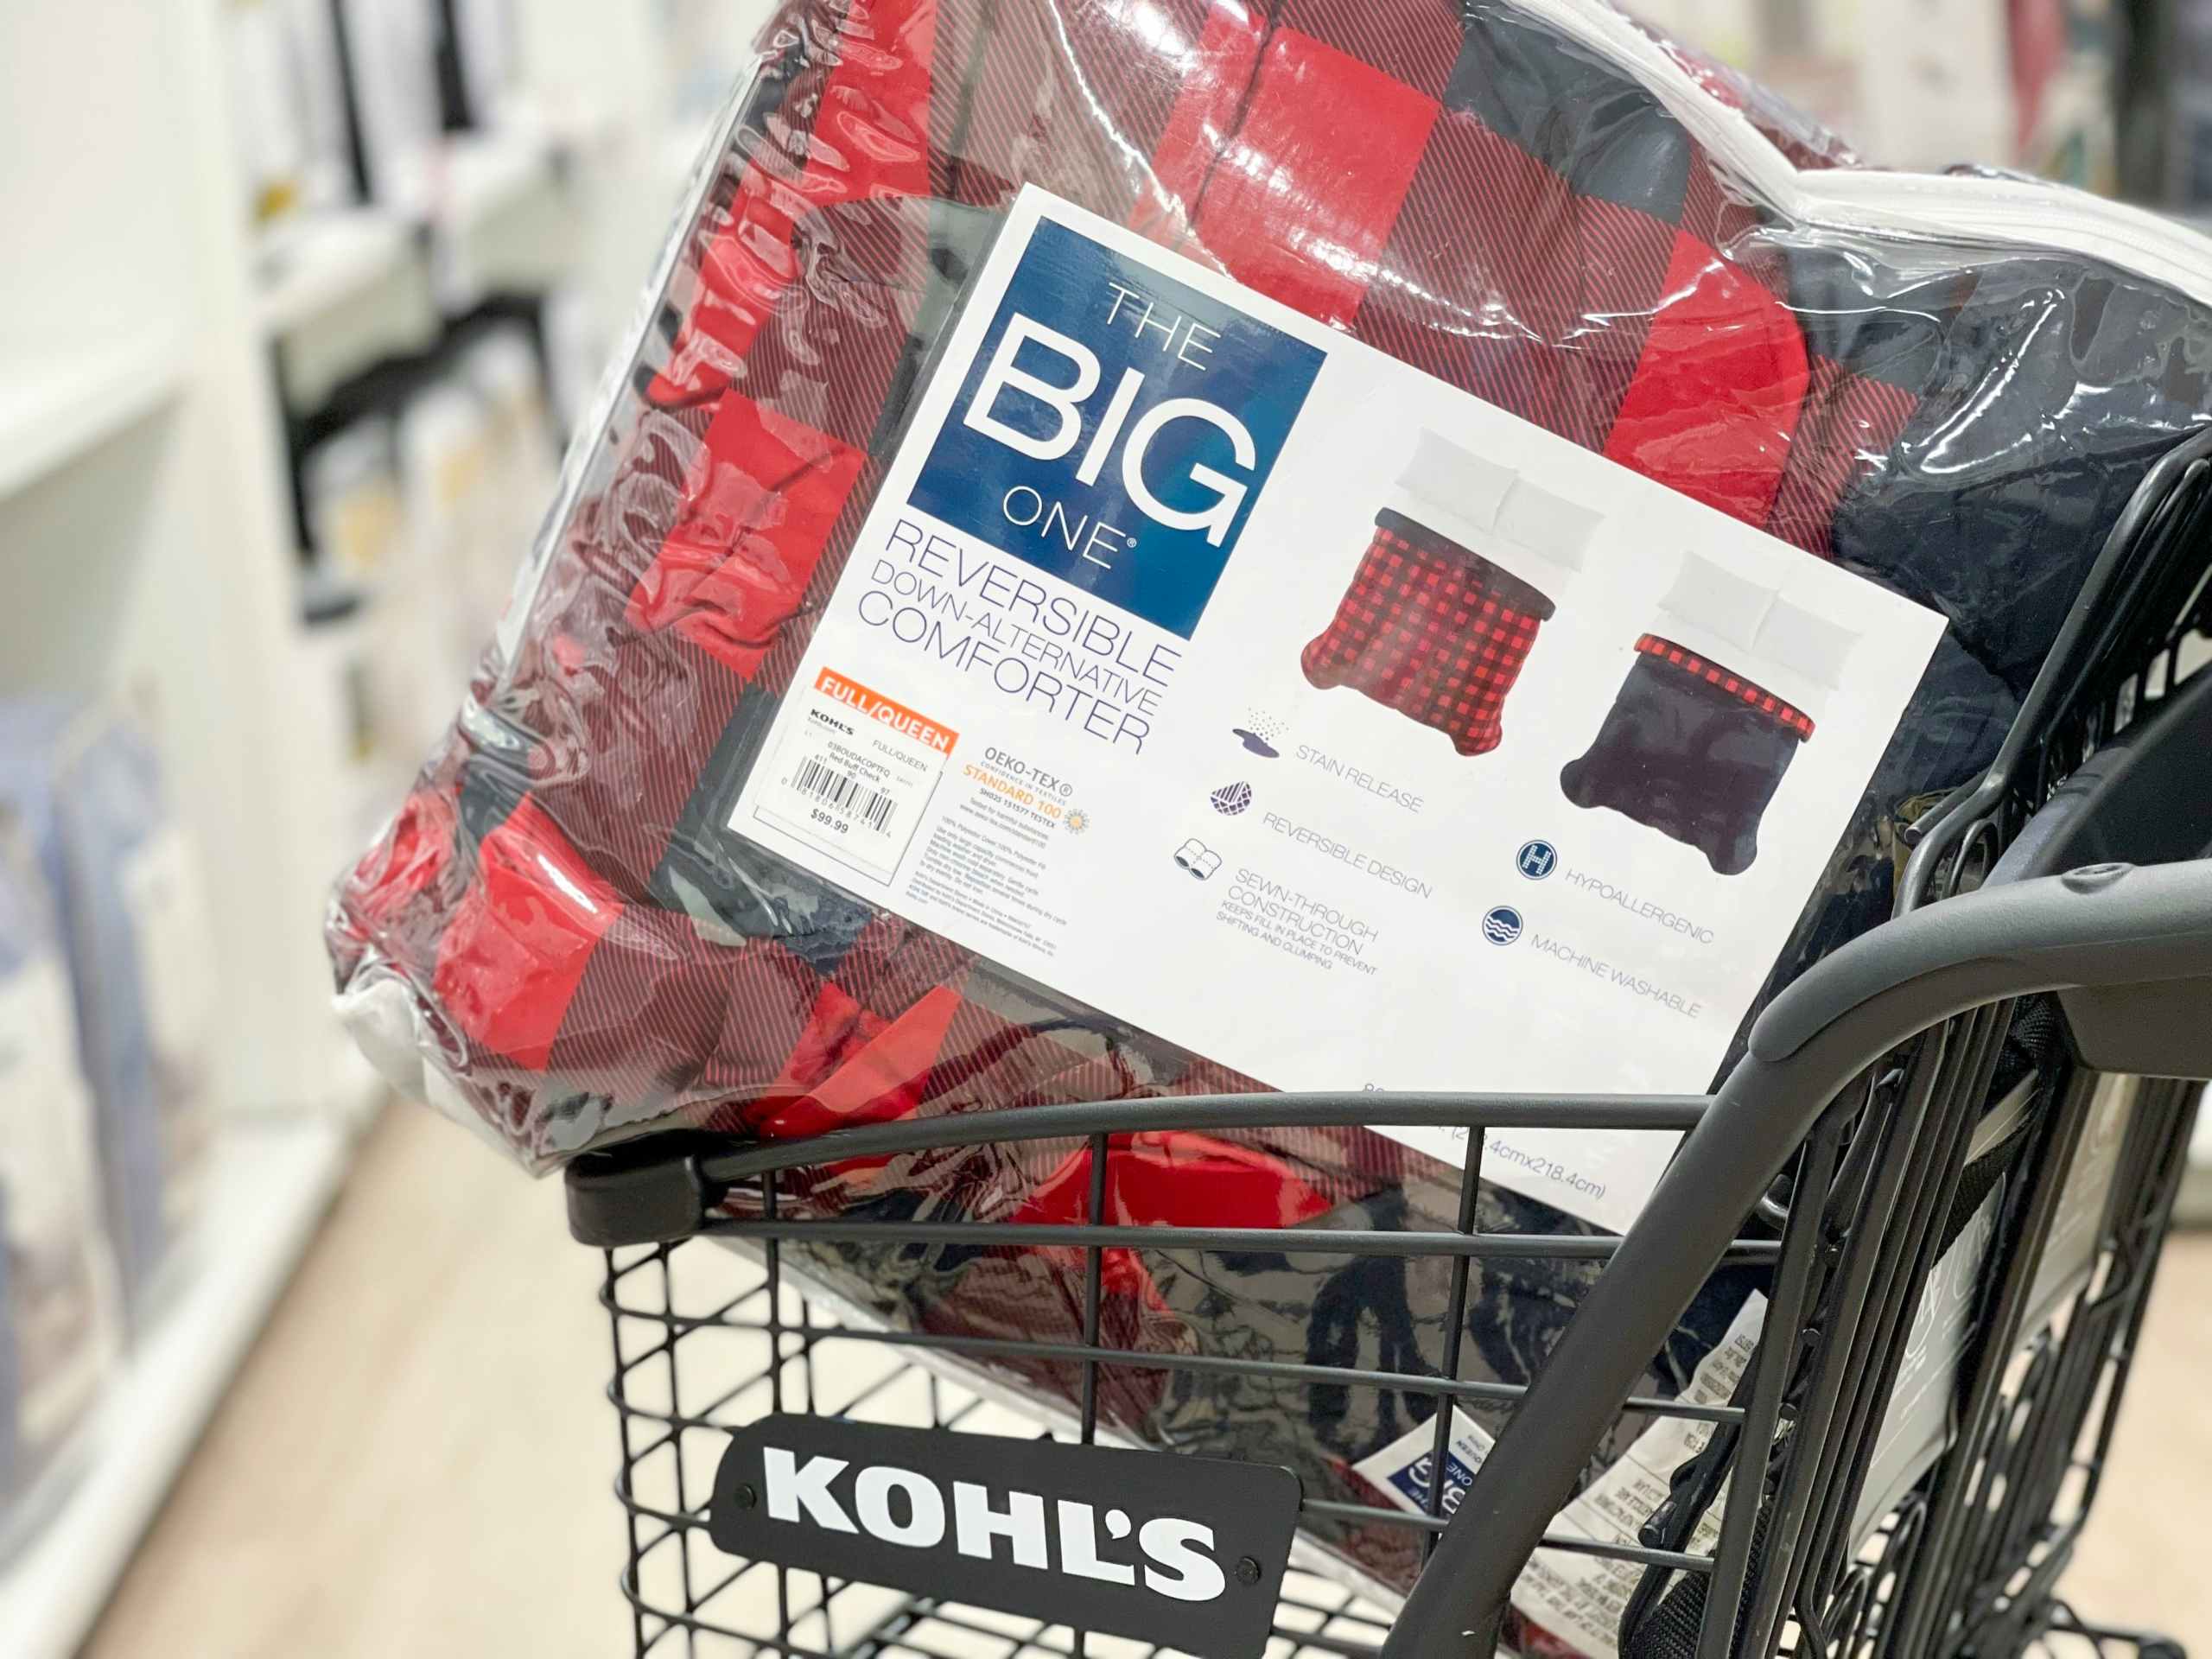 kohls-the-big-one-reversible-comforter-2021-4